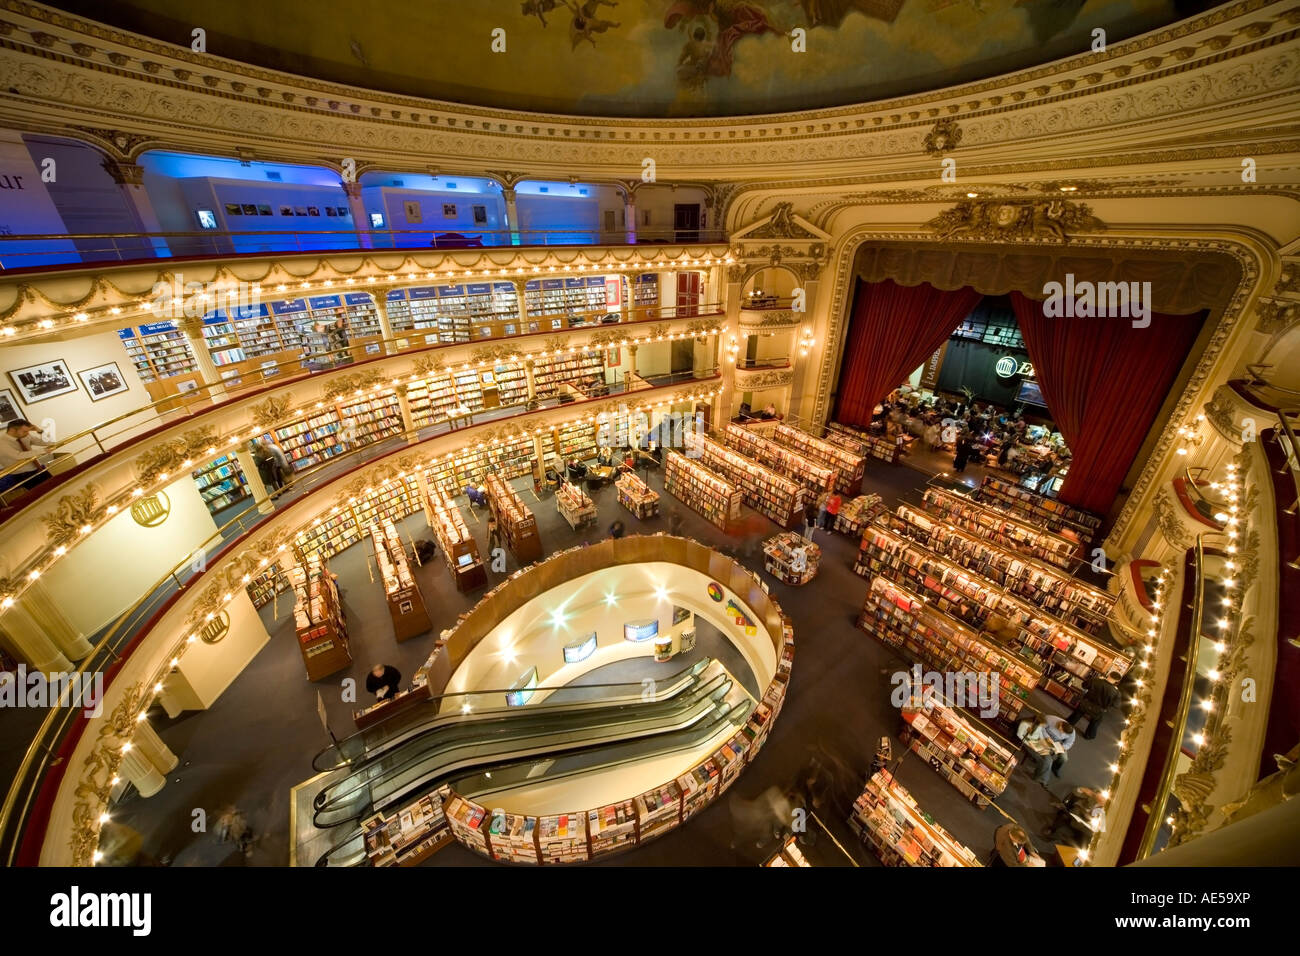 El Ateneo Grand Splendid Mega-Buchhandlung in Recoleta, Buenos Aires Argentinien. Altes Theater in modernen Buchladen, Geschäft umgewandelt. Stockfoto